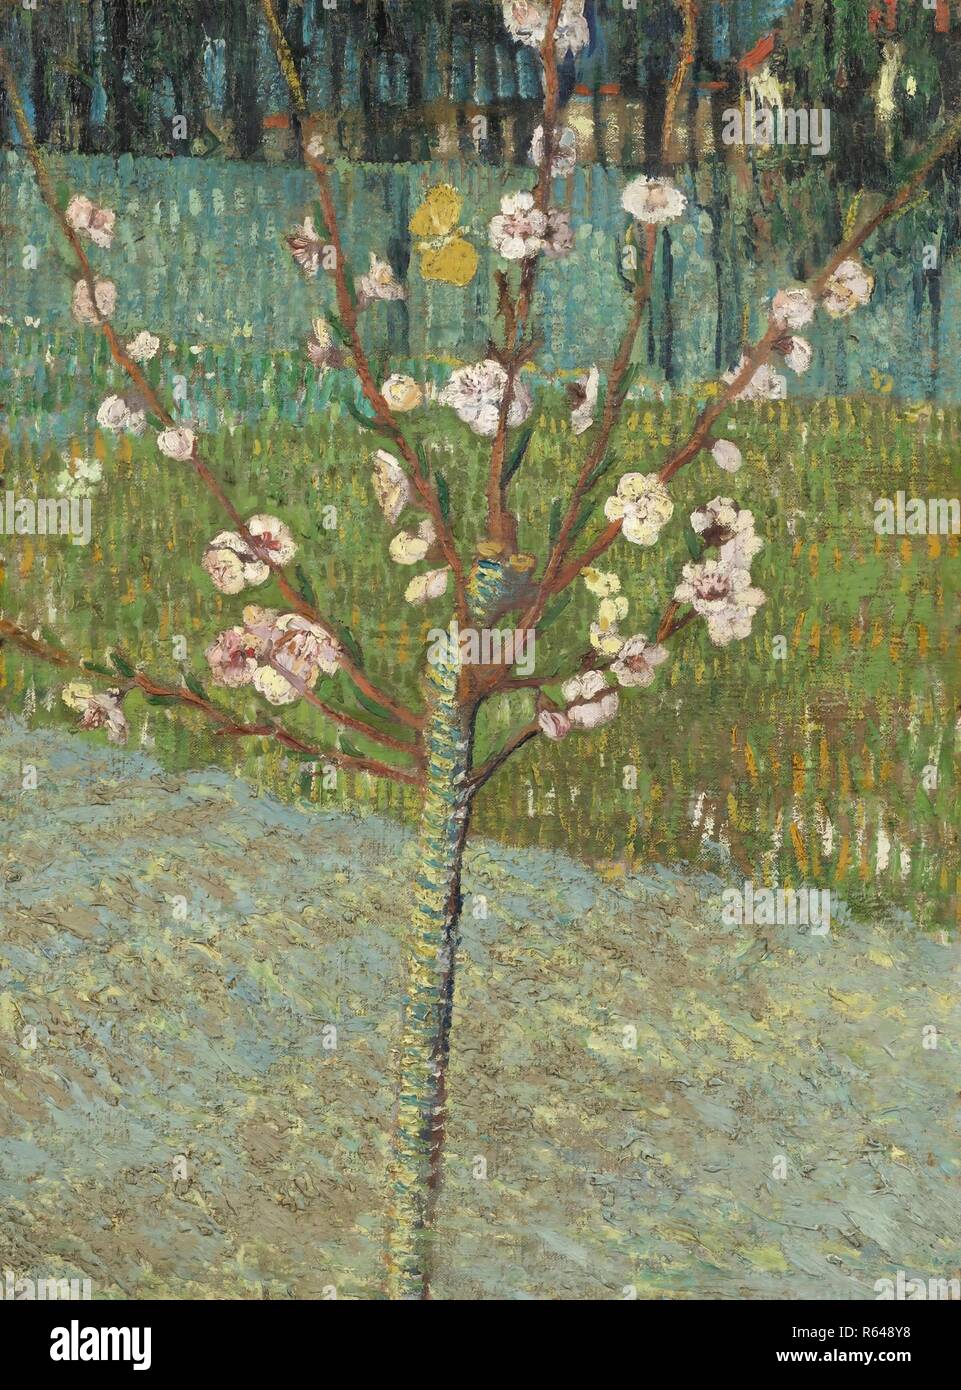 Peach Tree in Blossom. Date : avril 1888, Arles. Dimensions : 50 cm x 37,5 cm, 67 cm x 55 cm. Musée : Musée Van Gogh, Amsterdam. Auteur : VAN GOGH, Vincent. VINCENT VAN GOGH. Banque D'Images